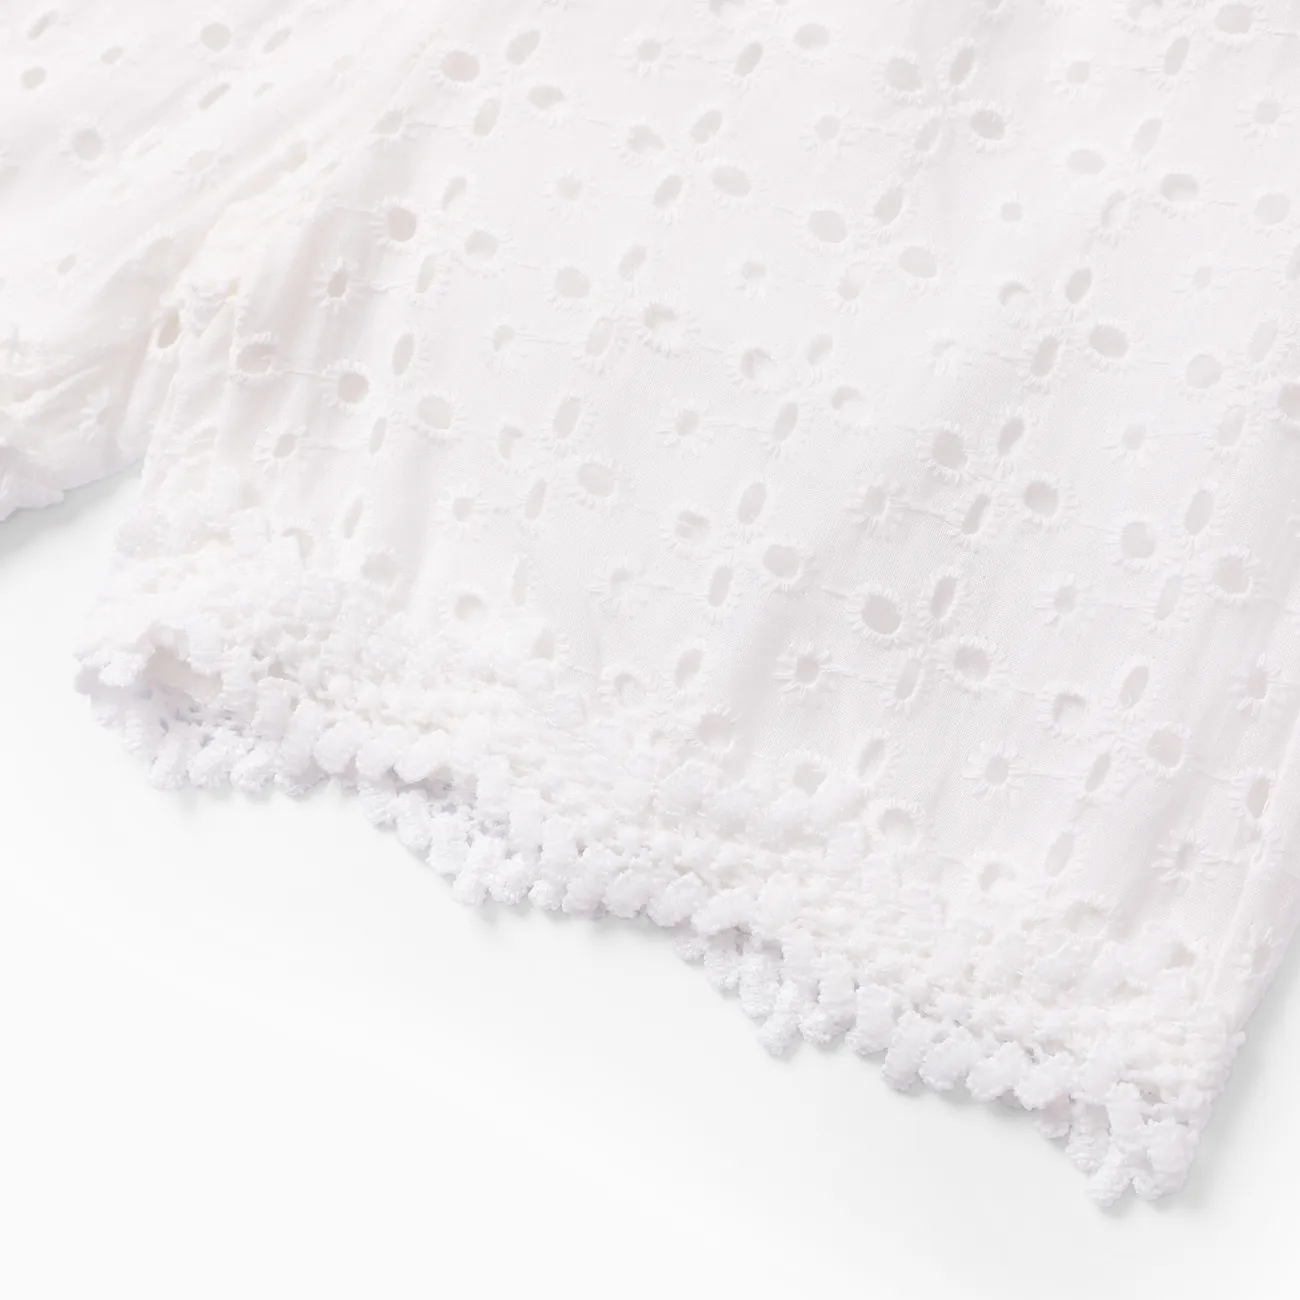 Toddler Girl 100% Cotton Lace Trim Schiffy Shorts White big image 1